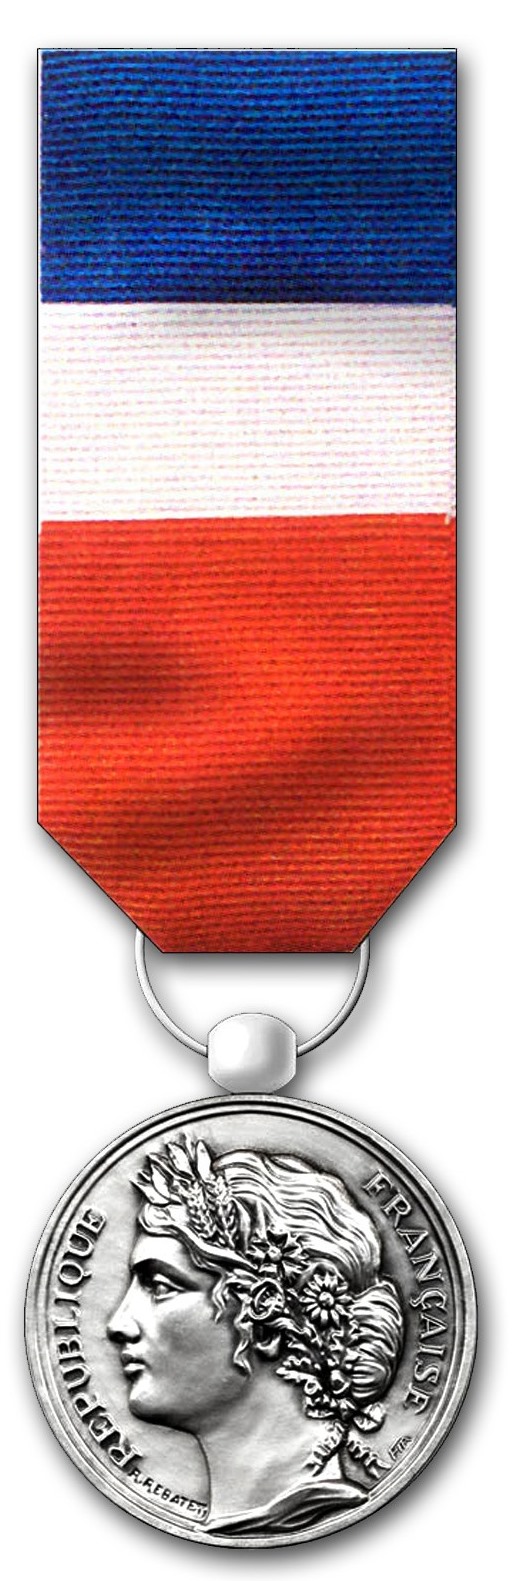 Médaille Marianne Rebatet échelon Argent